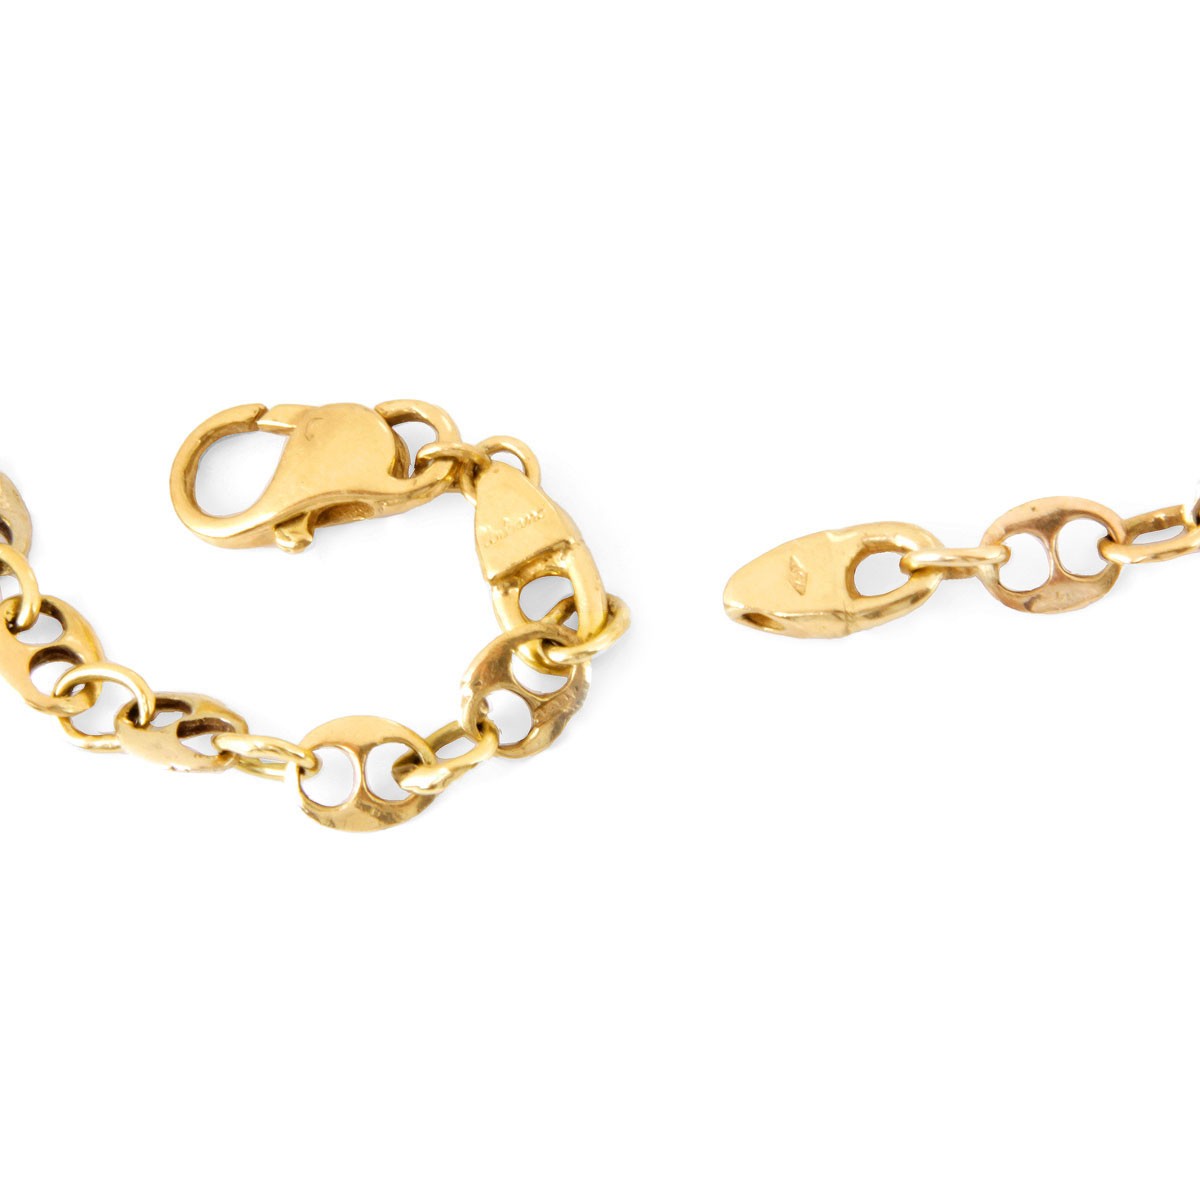 Vintage 18K Gold Equestrian Charm Necklace